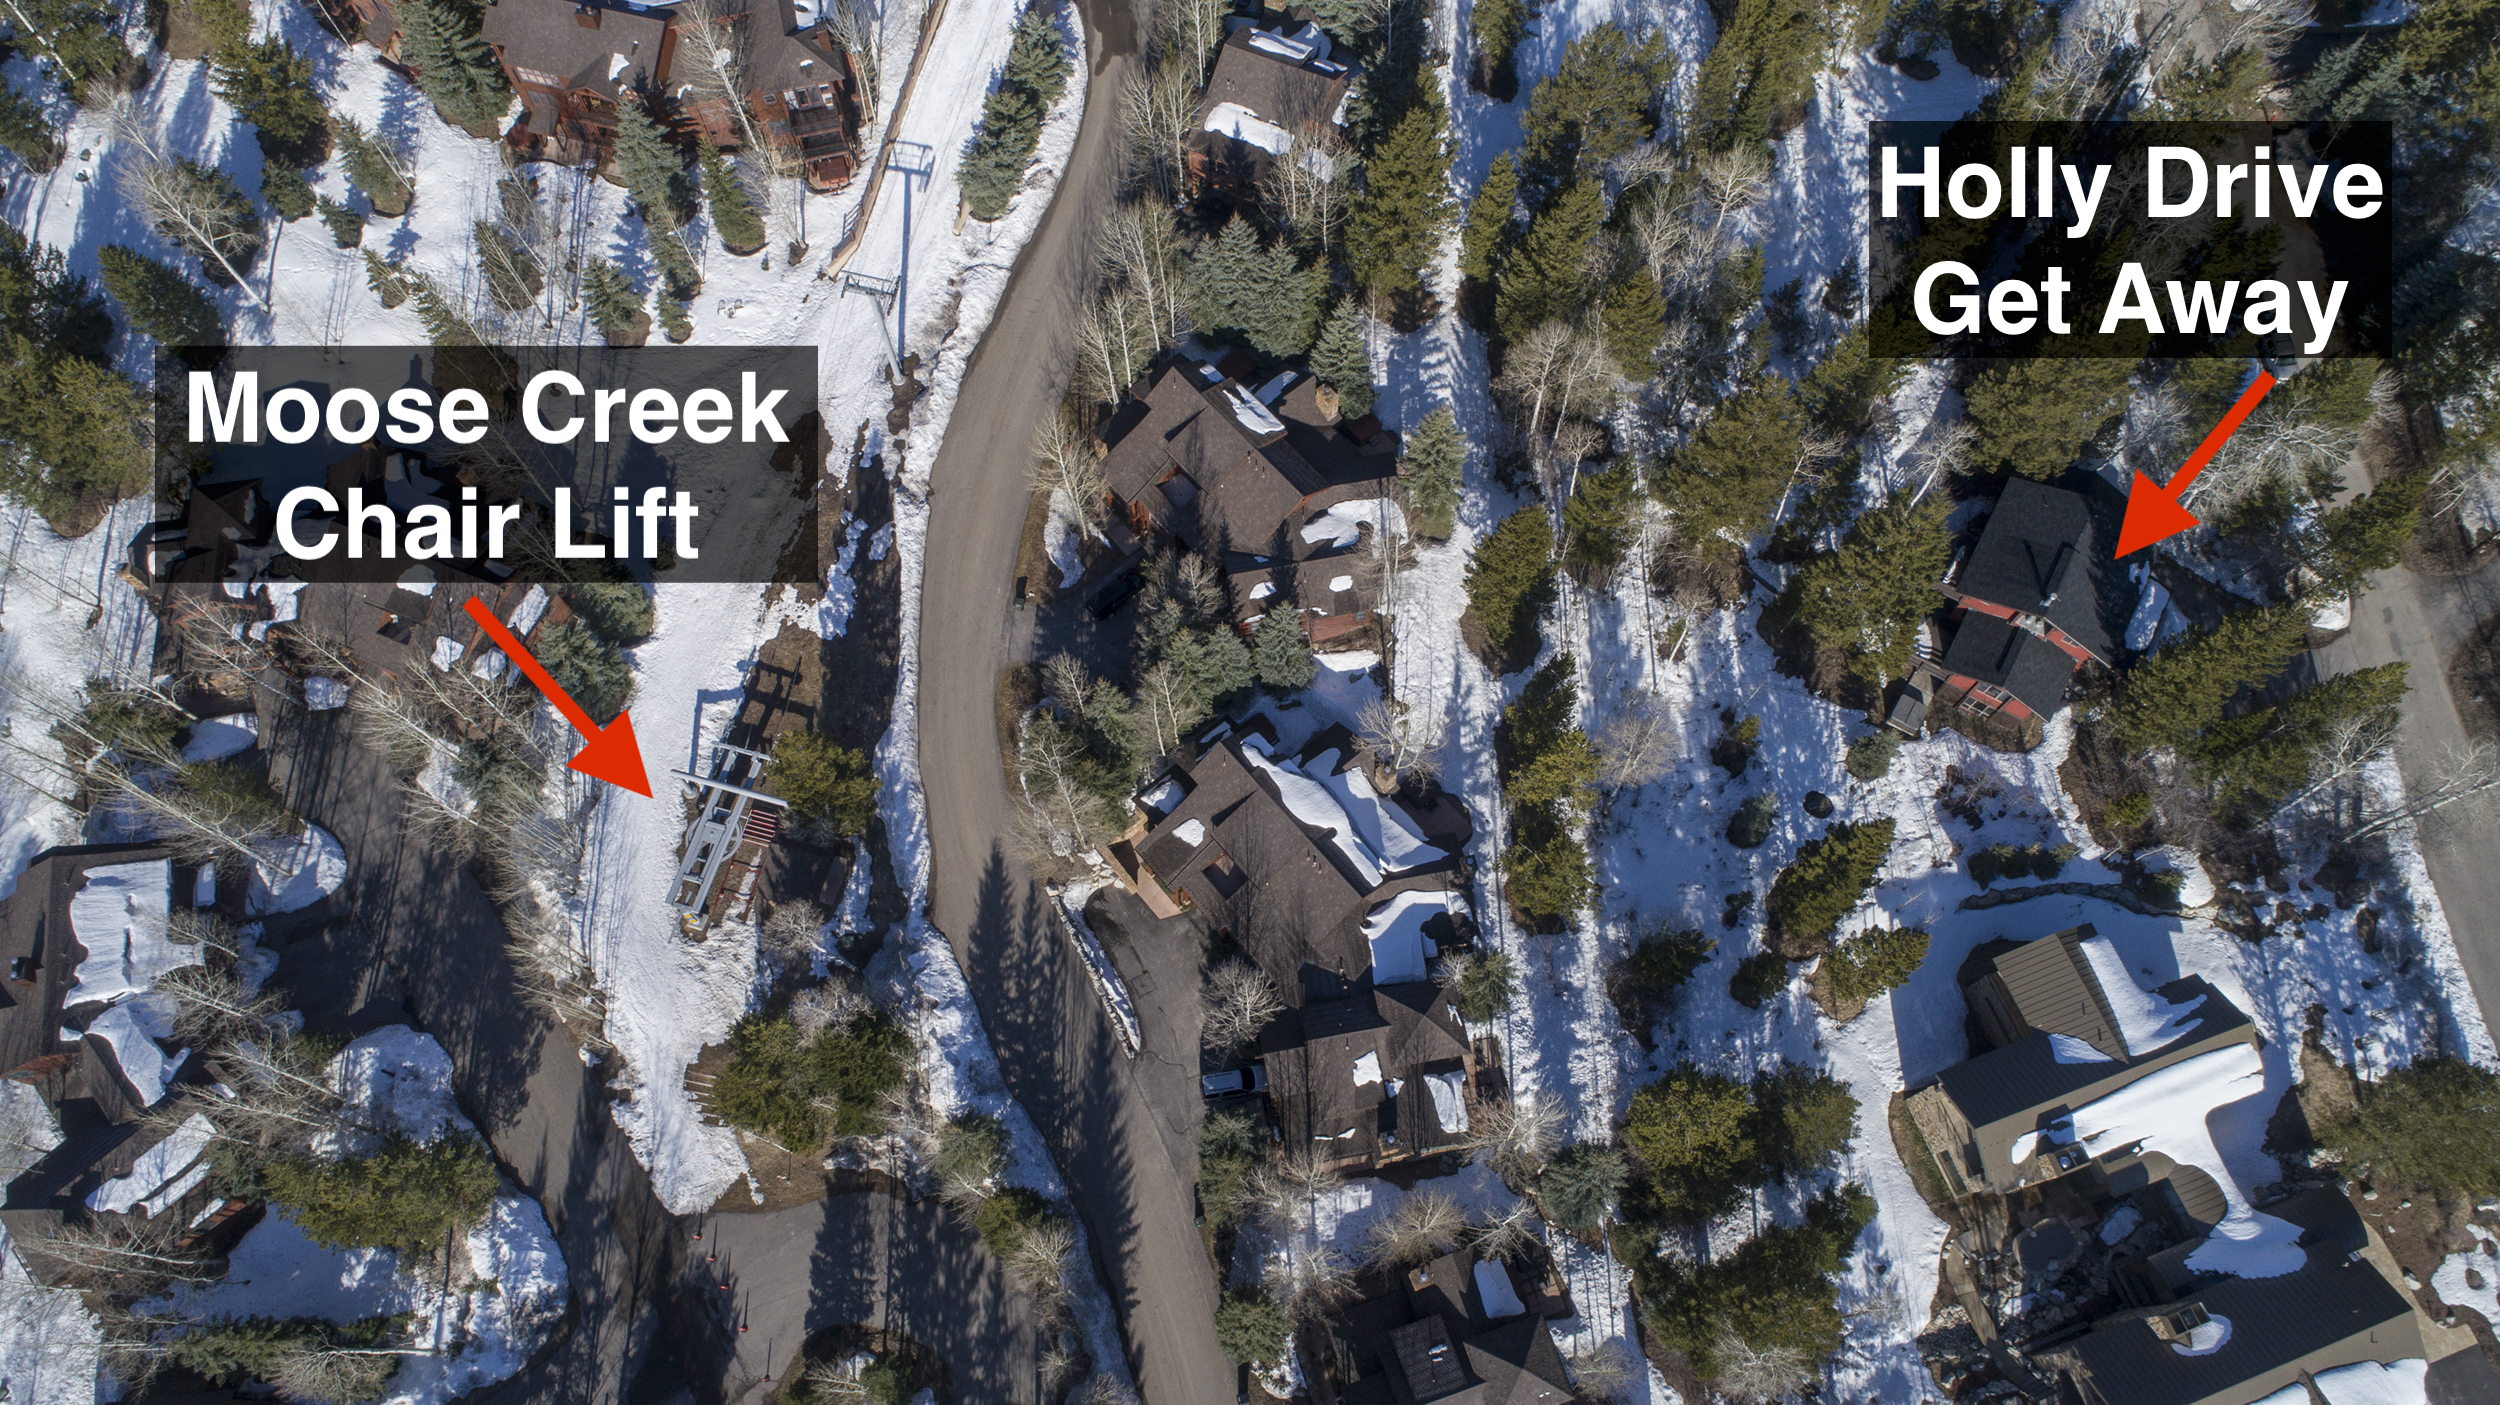 Teton Village Ski Real Estate - Holly Drive GetAway